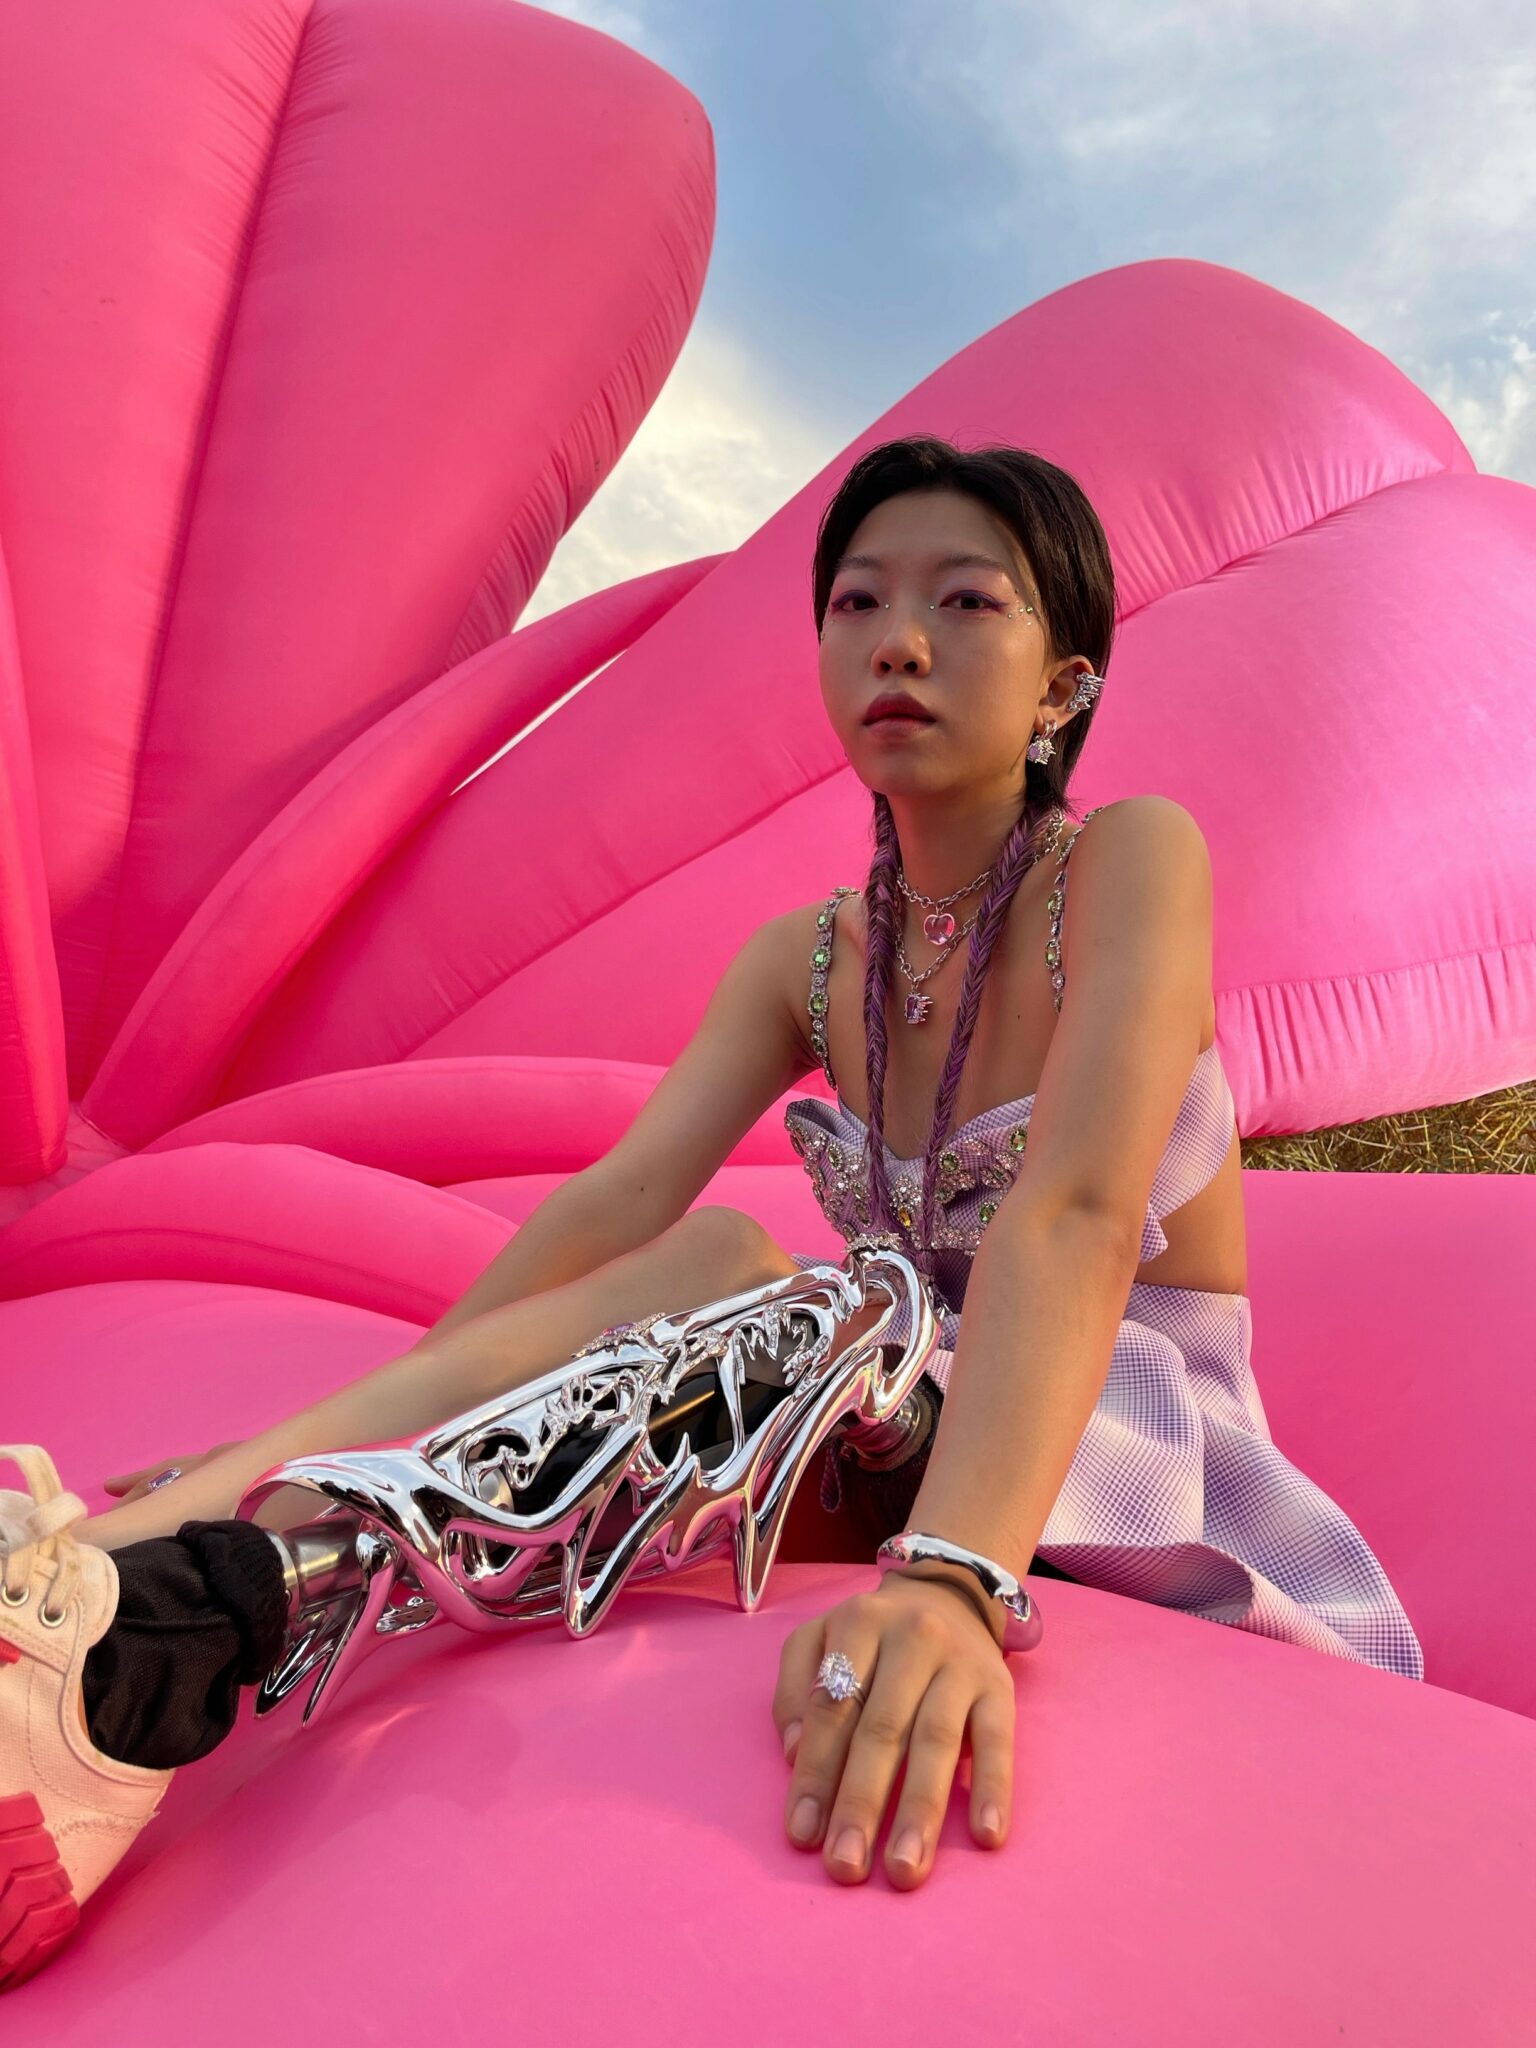 Xiao Yang, la modelo e influencer que inspiró a tratar las prótesis como arte